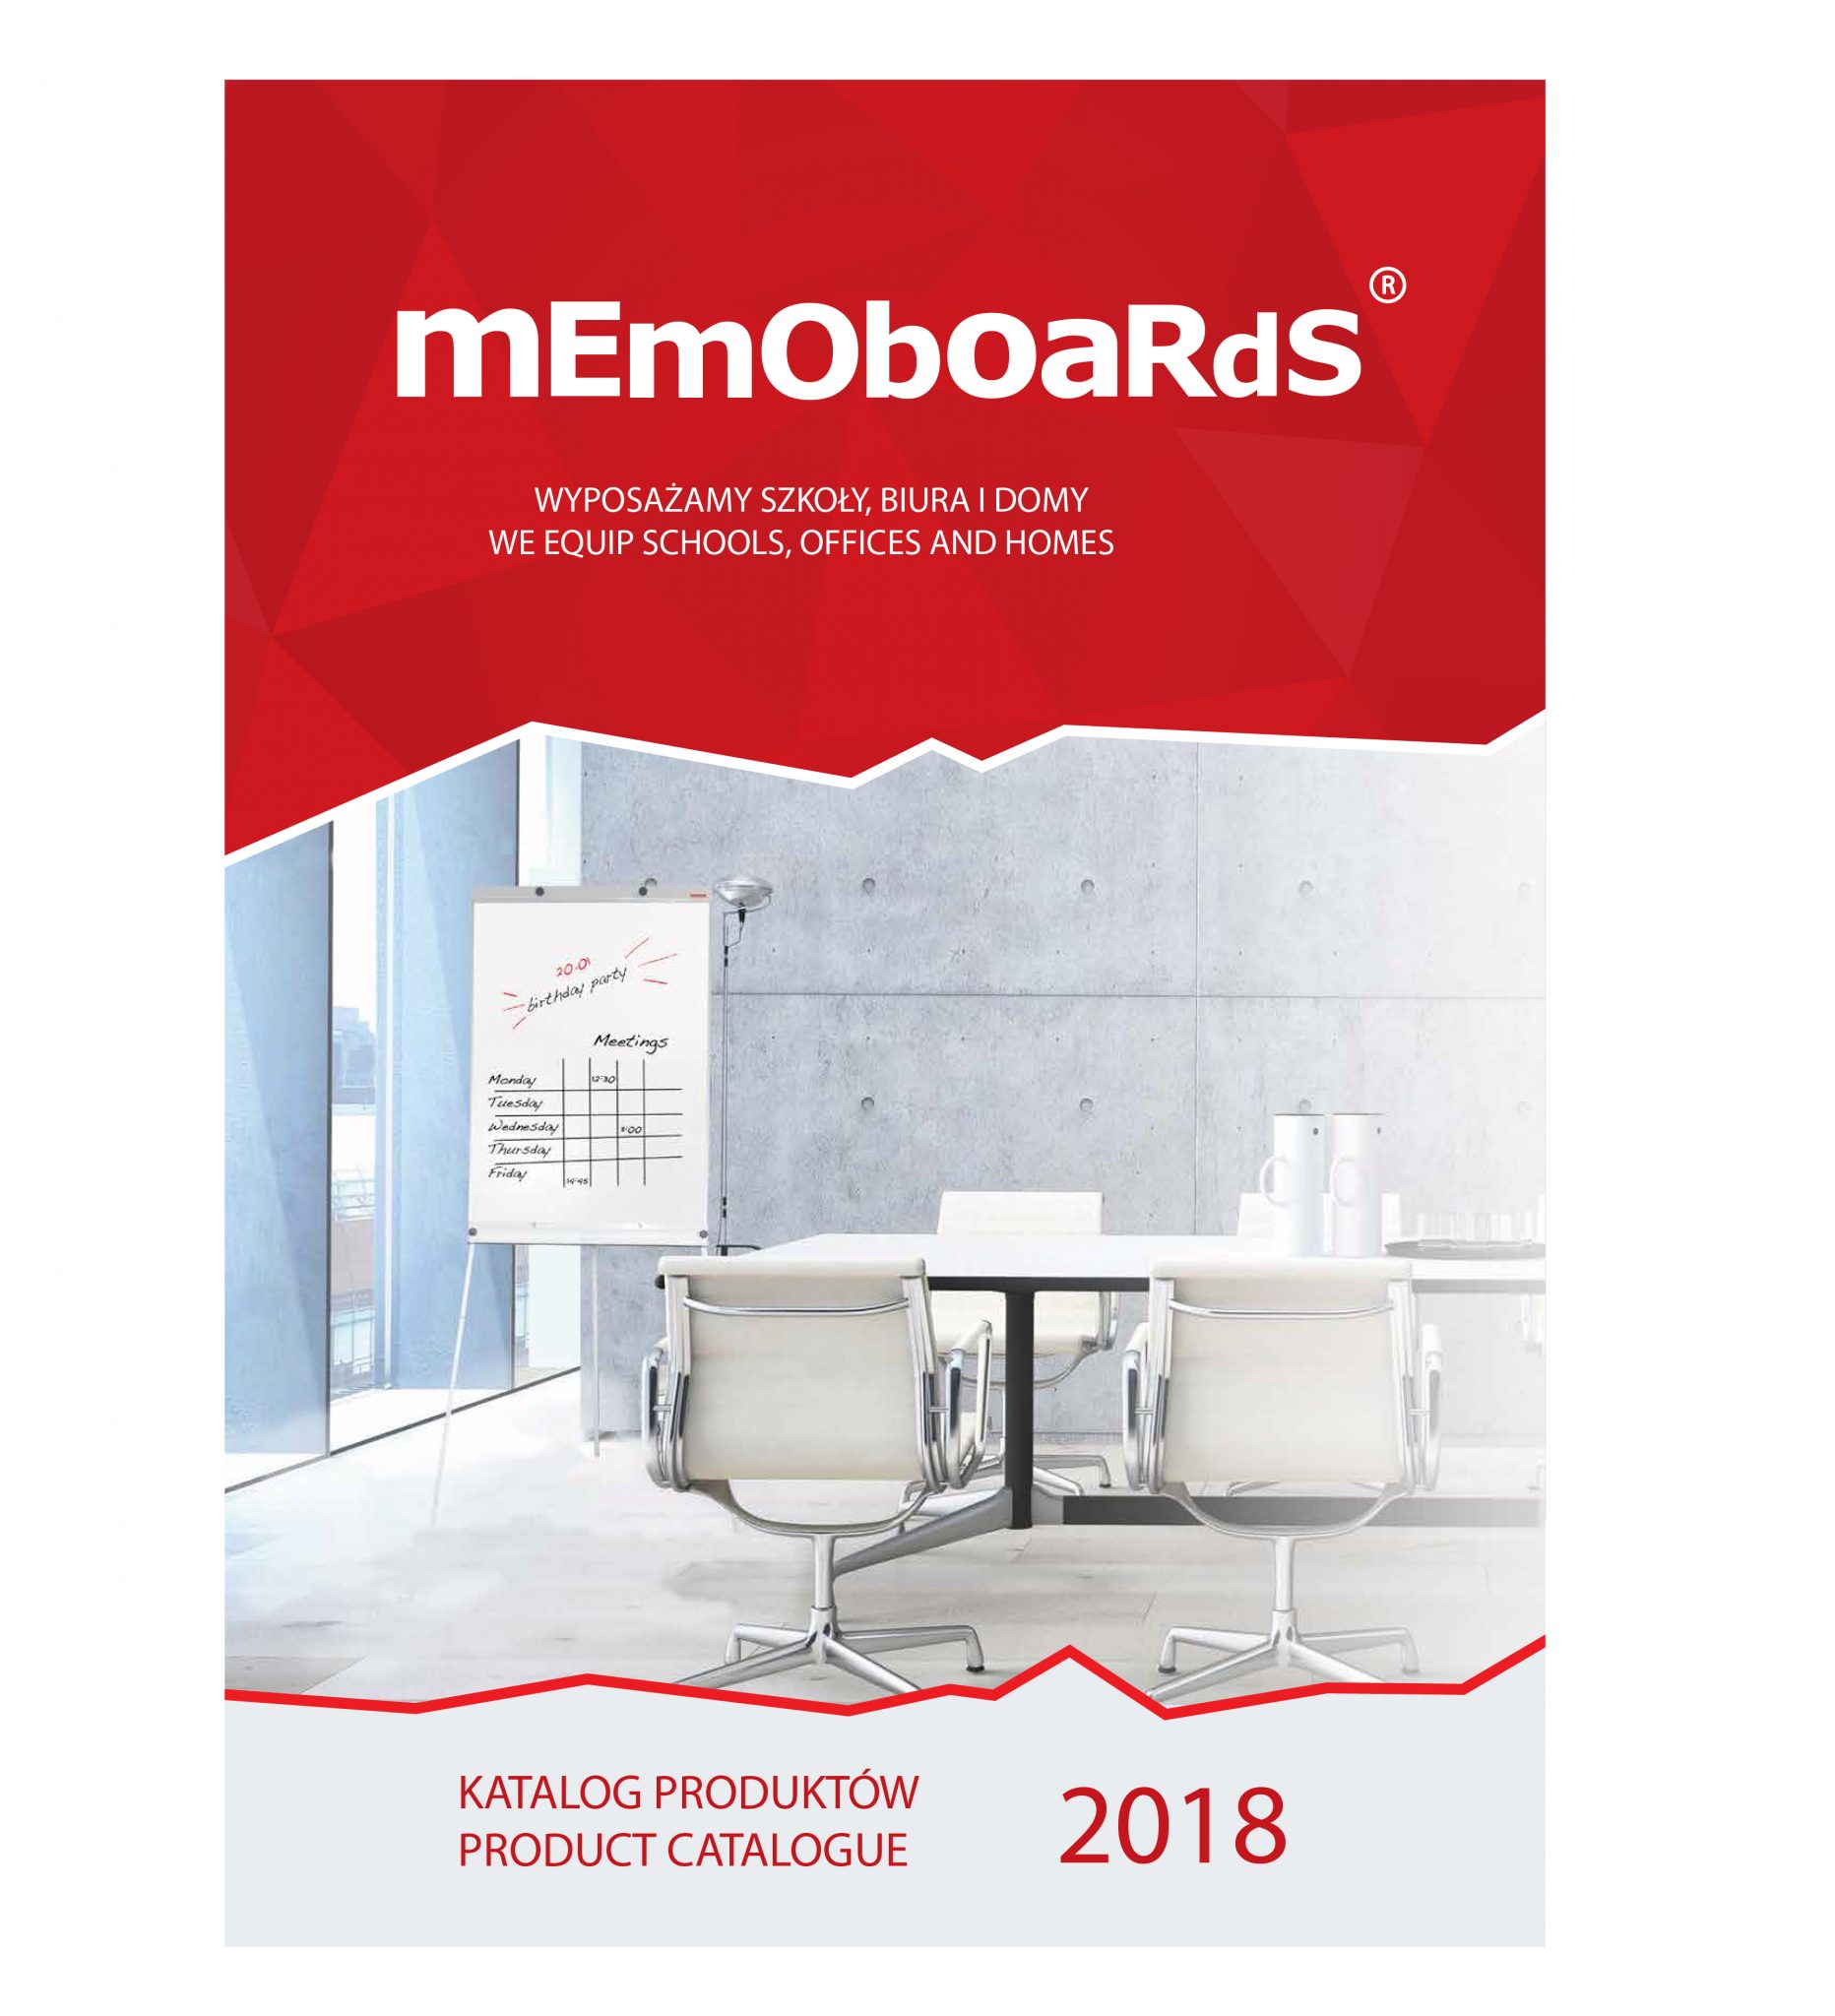 memoboards catalogue 2018